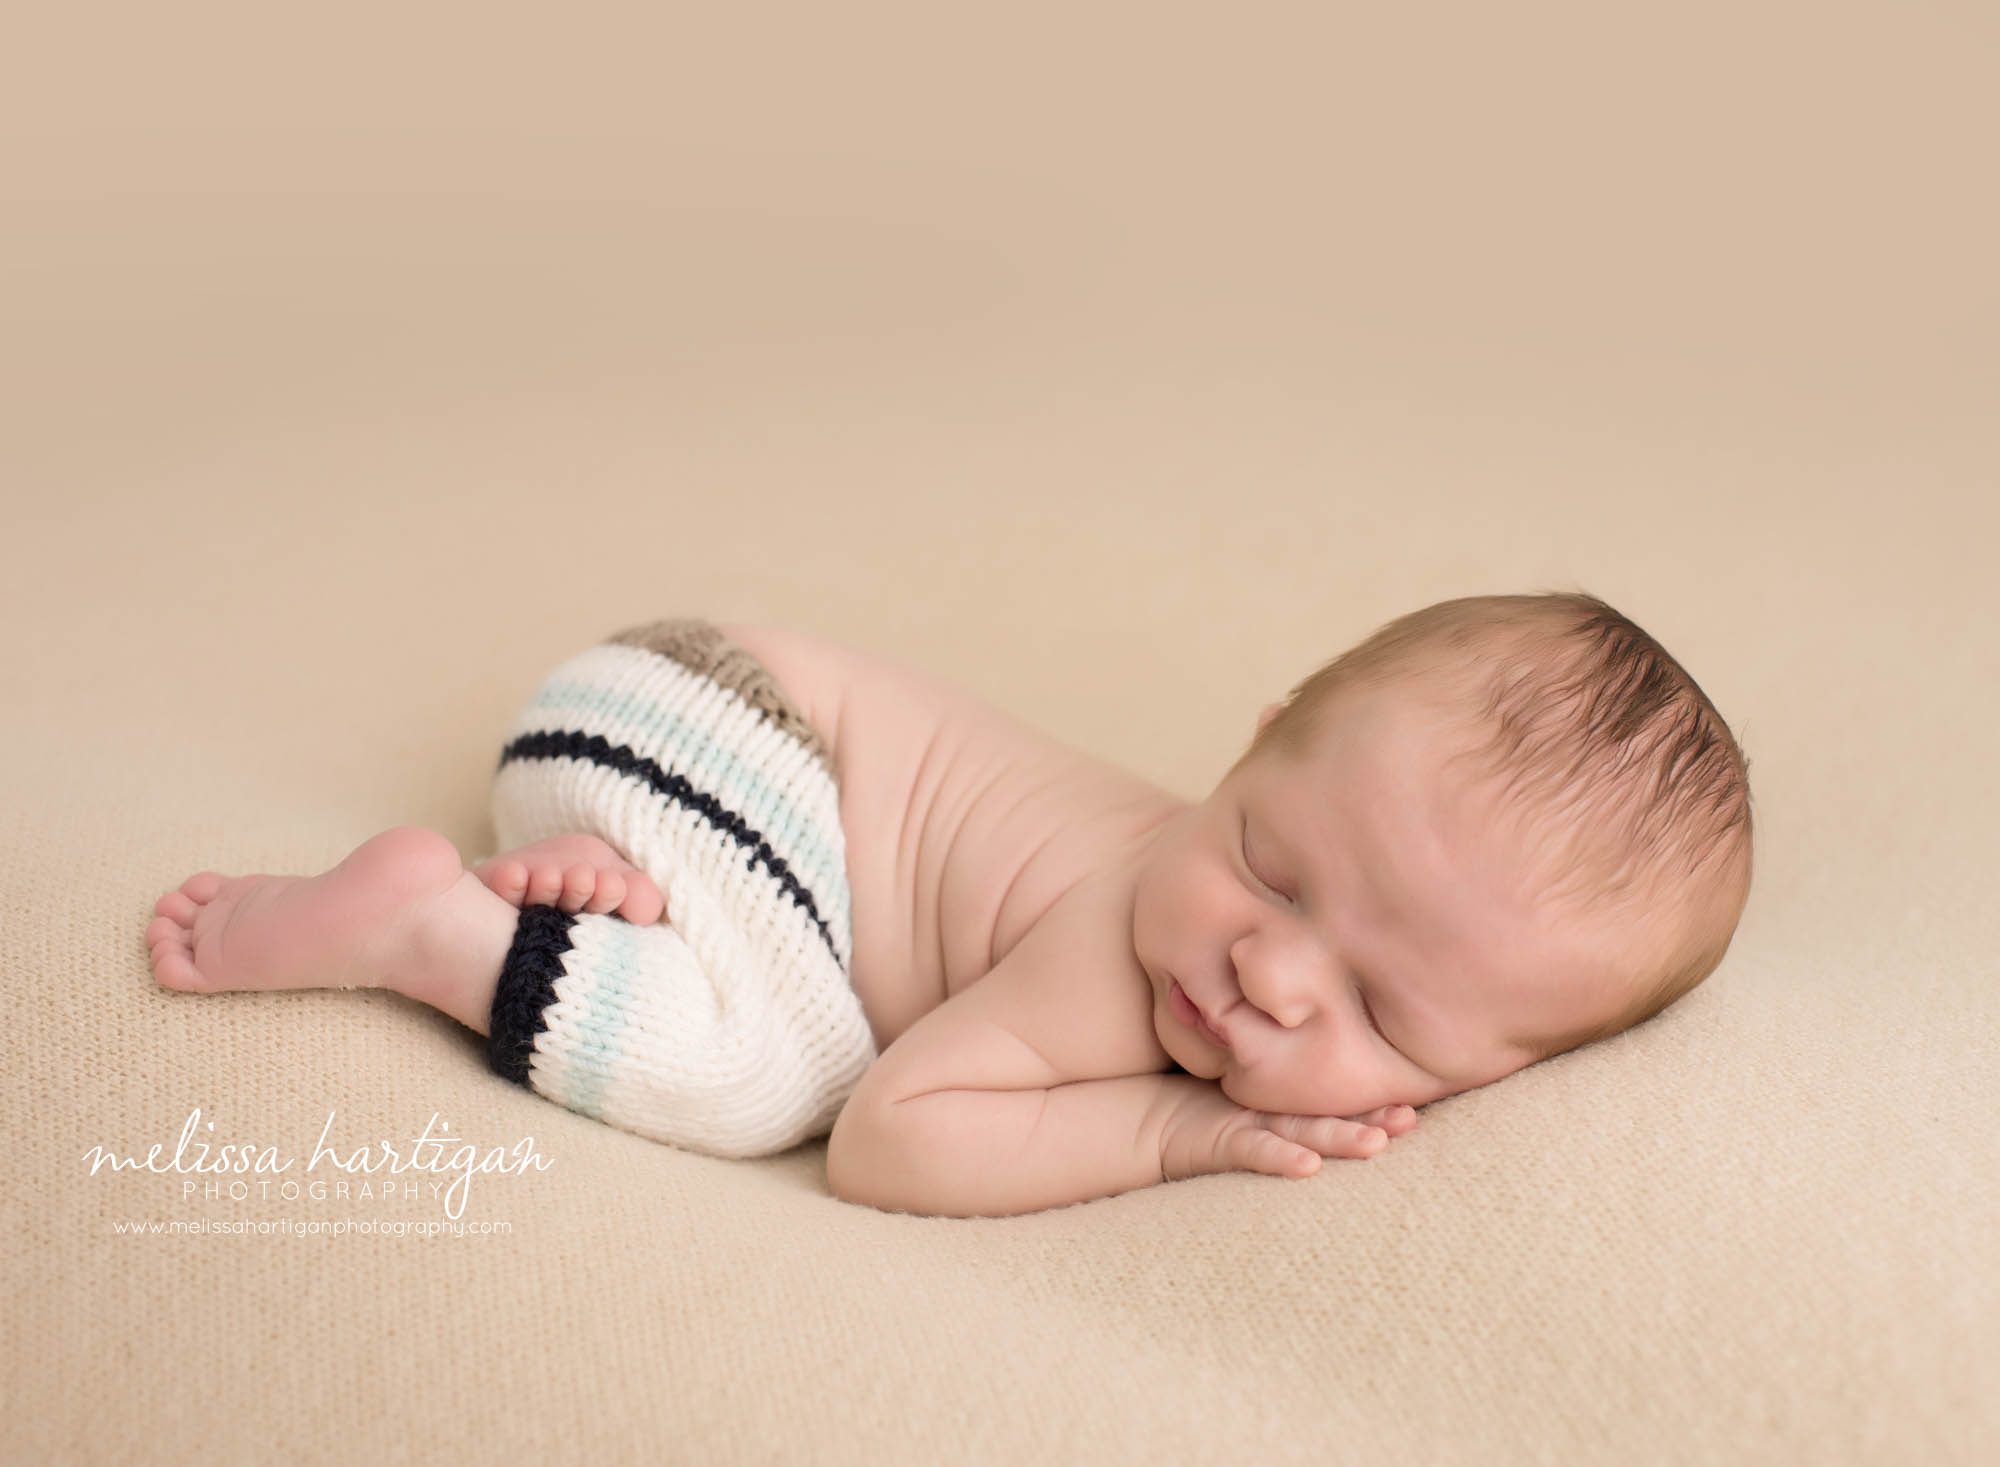 Melissa Hartigan Photography Newborn Photographer Connecticut baby boy wearing striped knit pants sleeping on light tan blanket